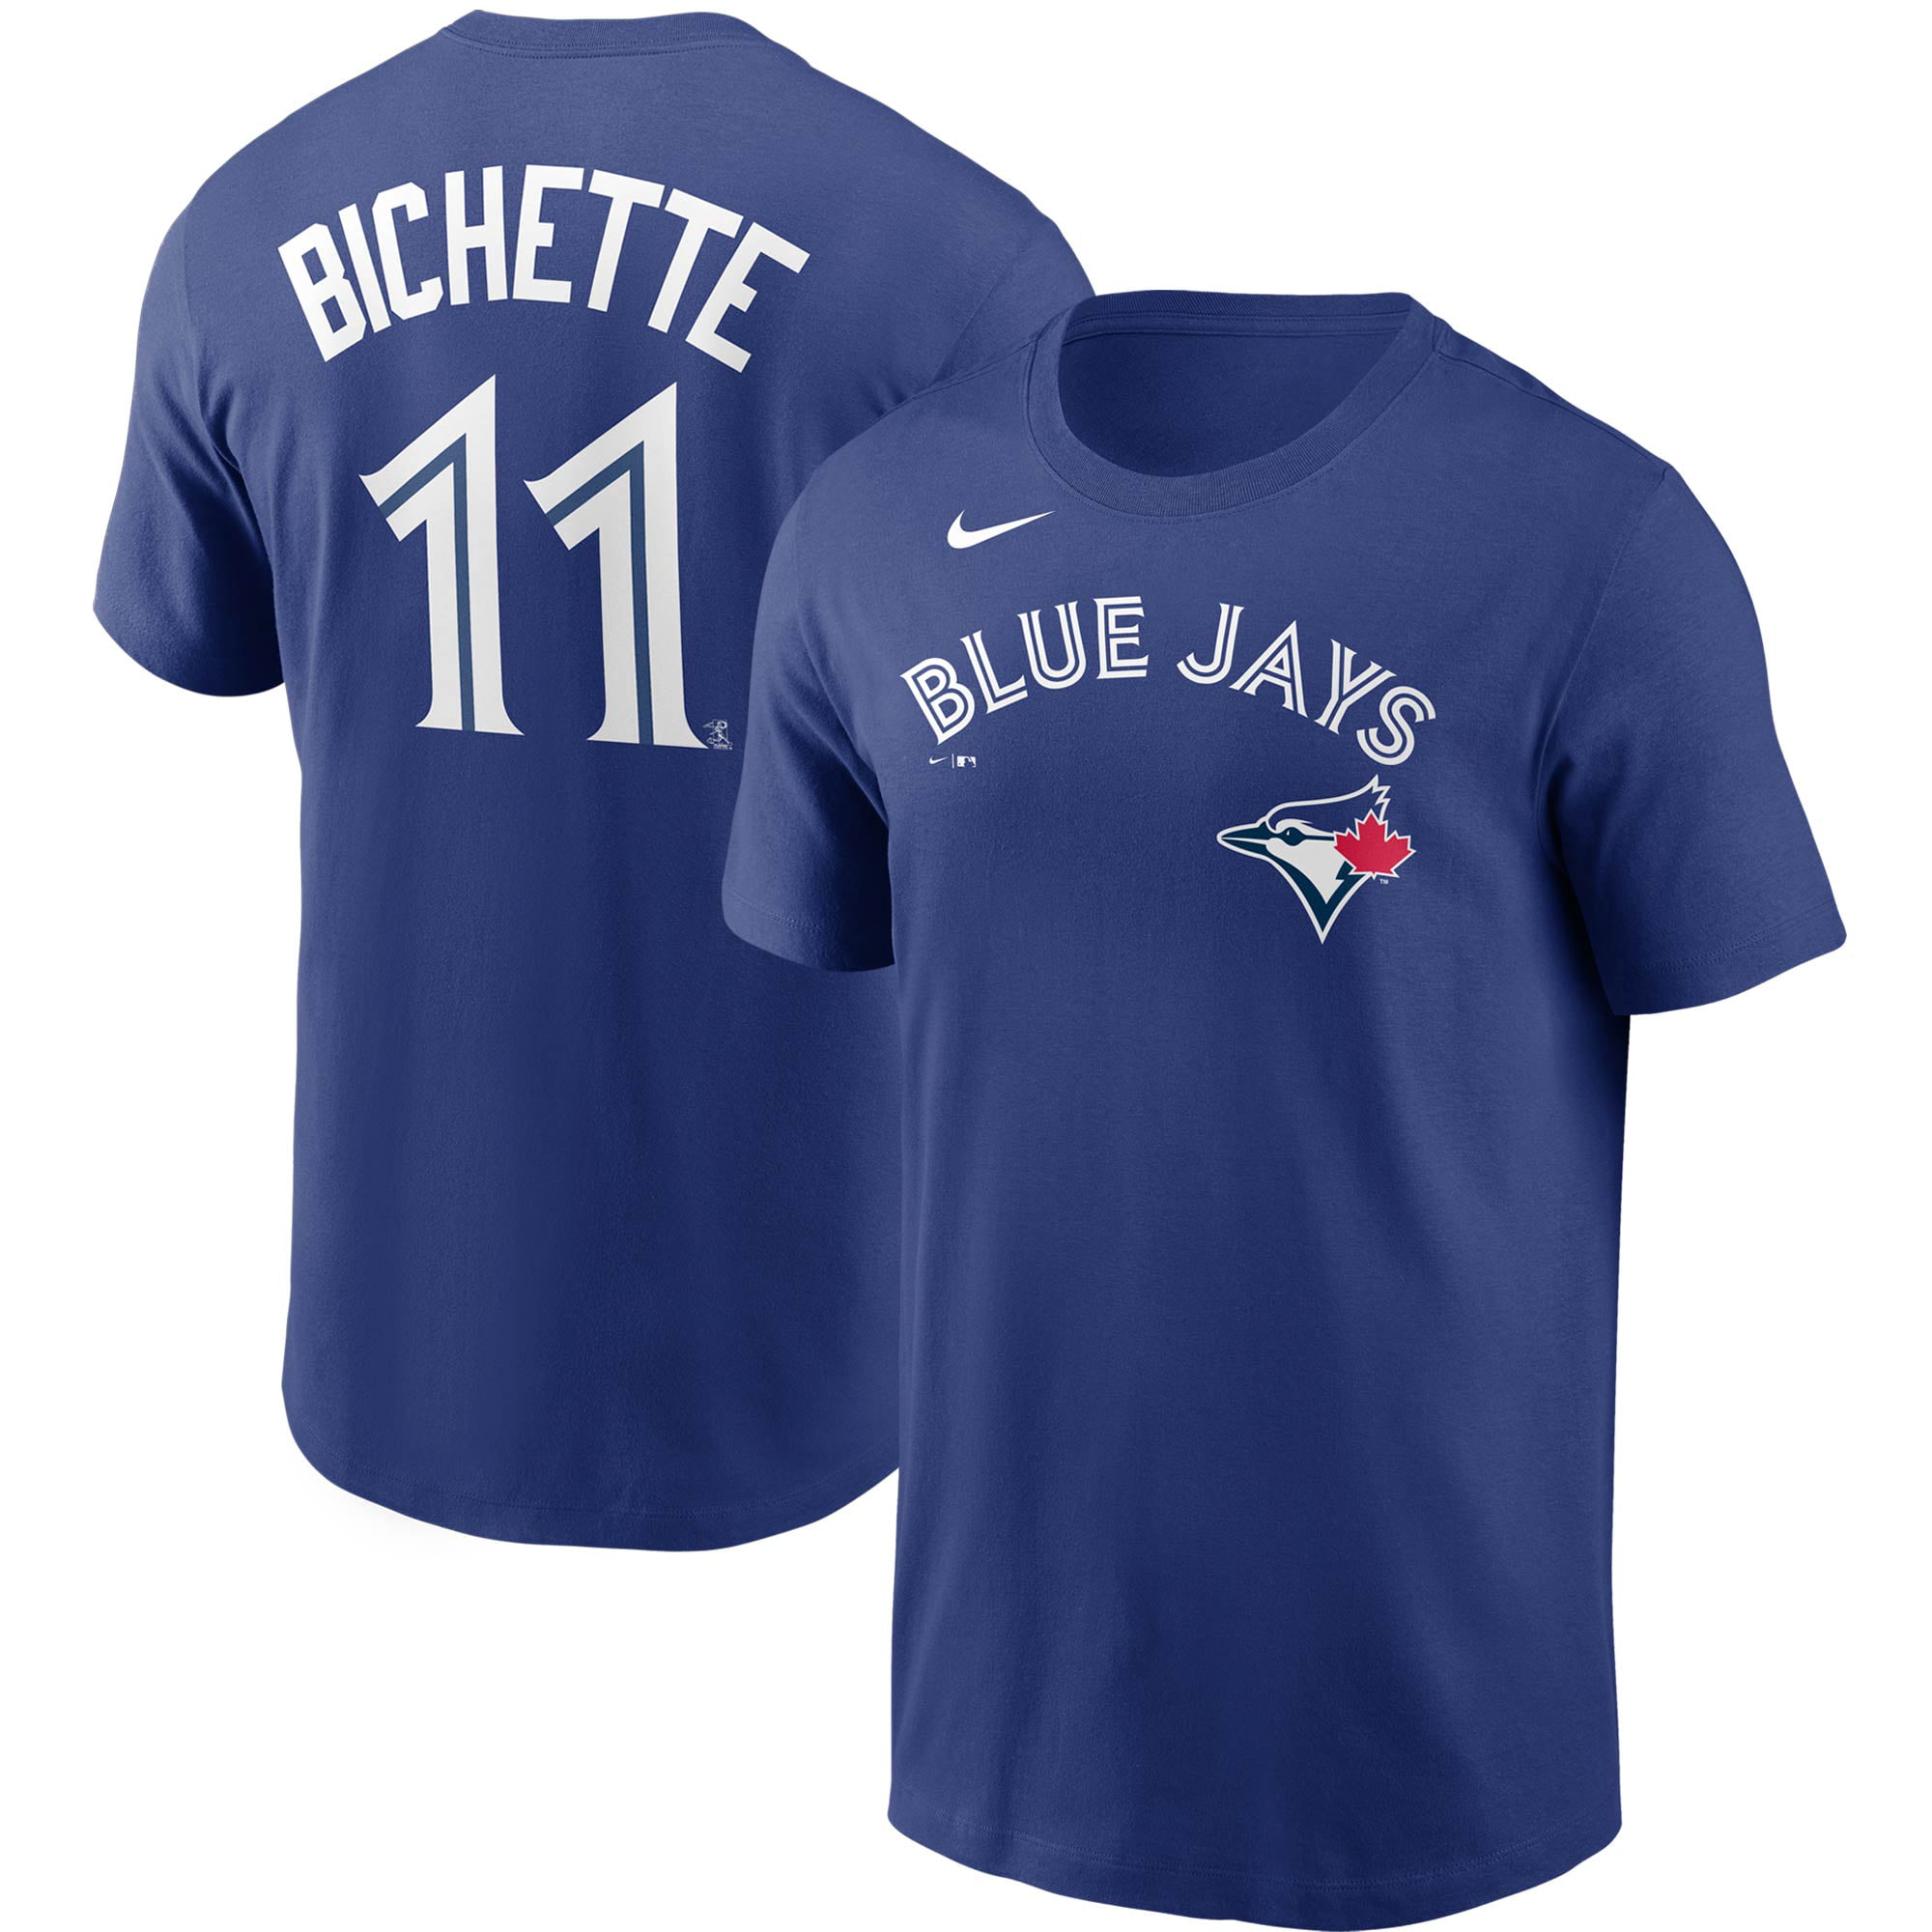 Bo Bichette T-Shirts, Bo Bichette Name & Number Shirts - Blue Jays